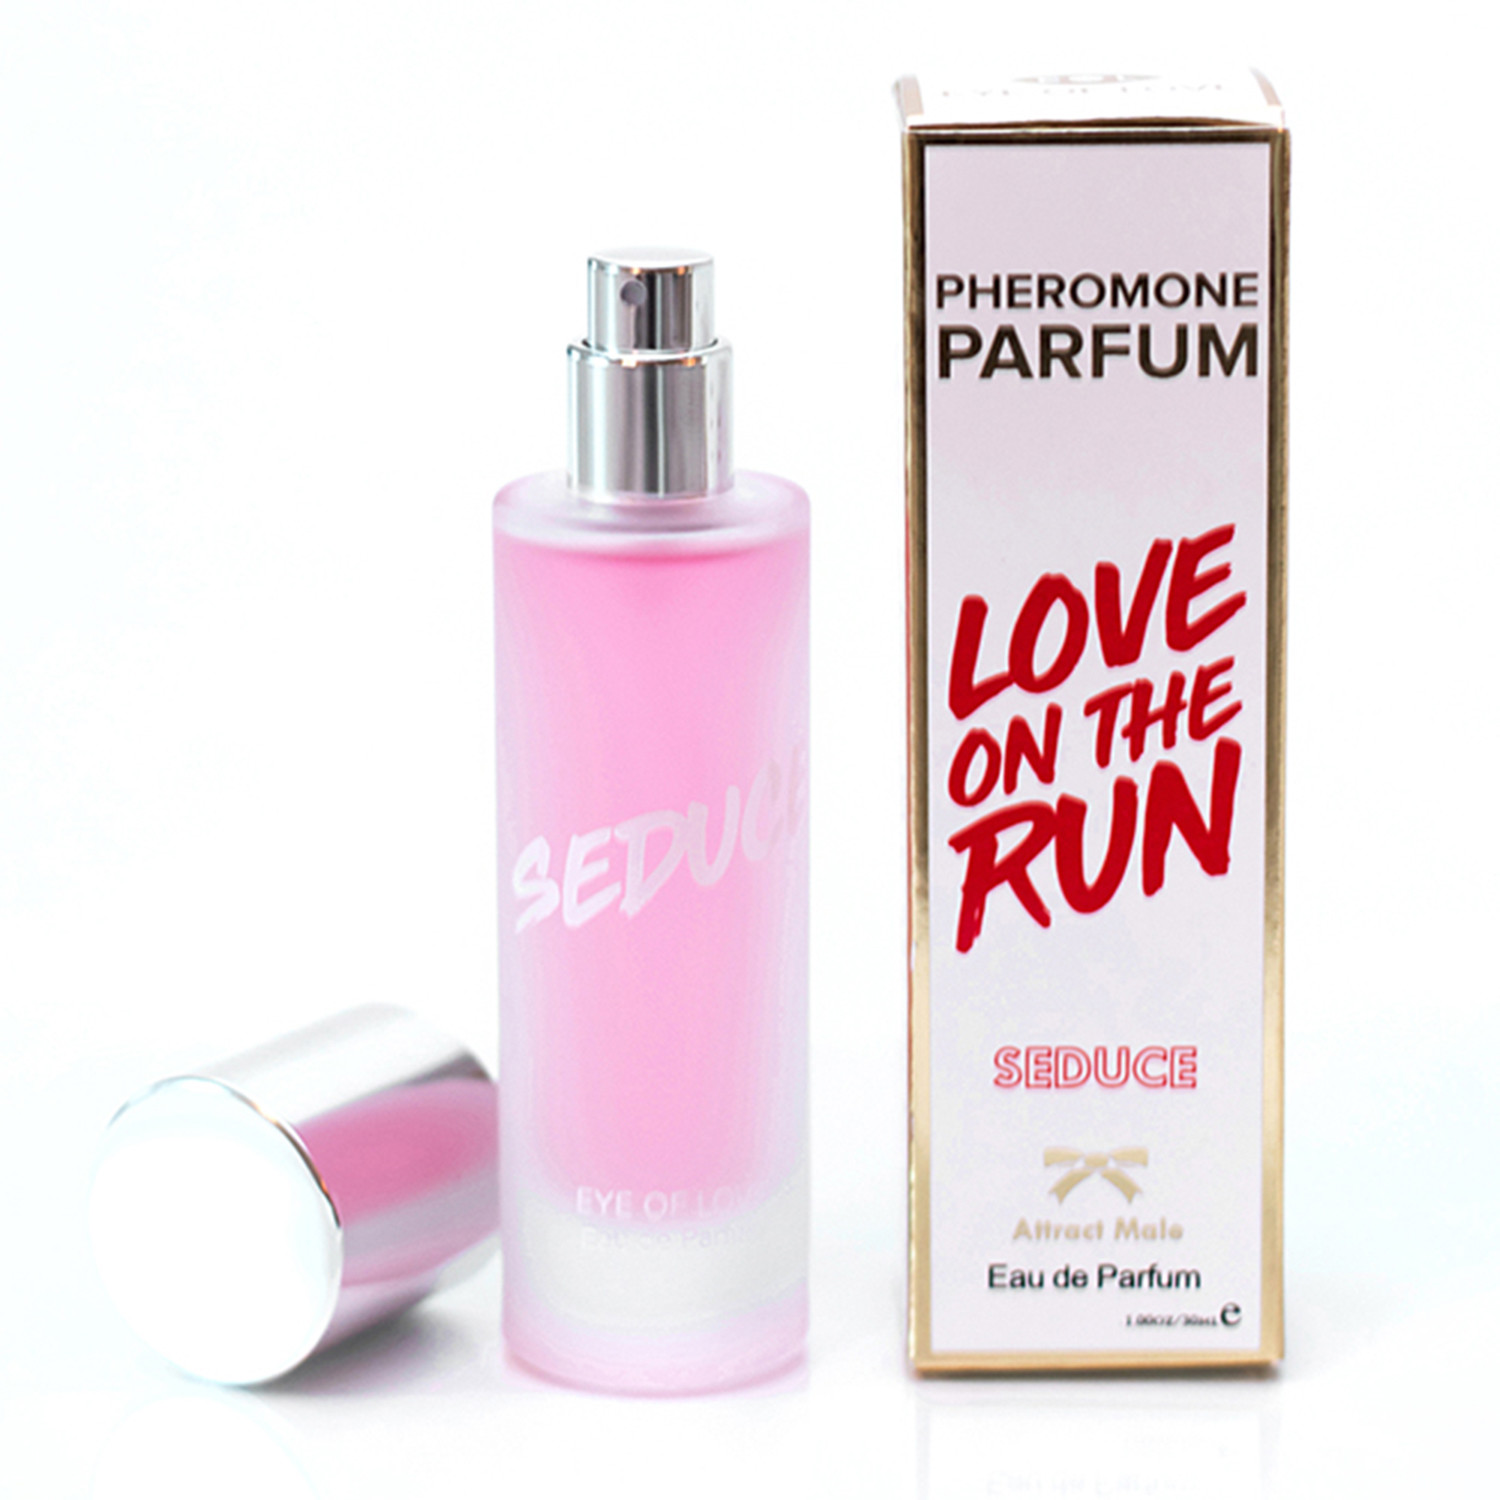  Eye Love Seduxe 30ml Pheromone Parfum- Experience the